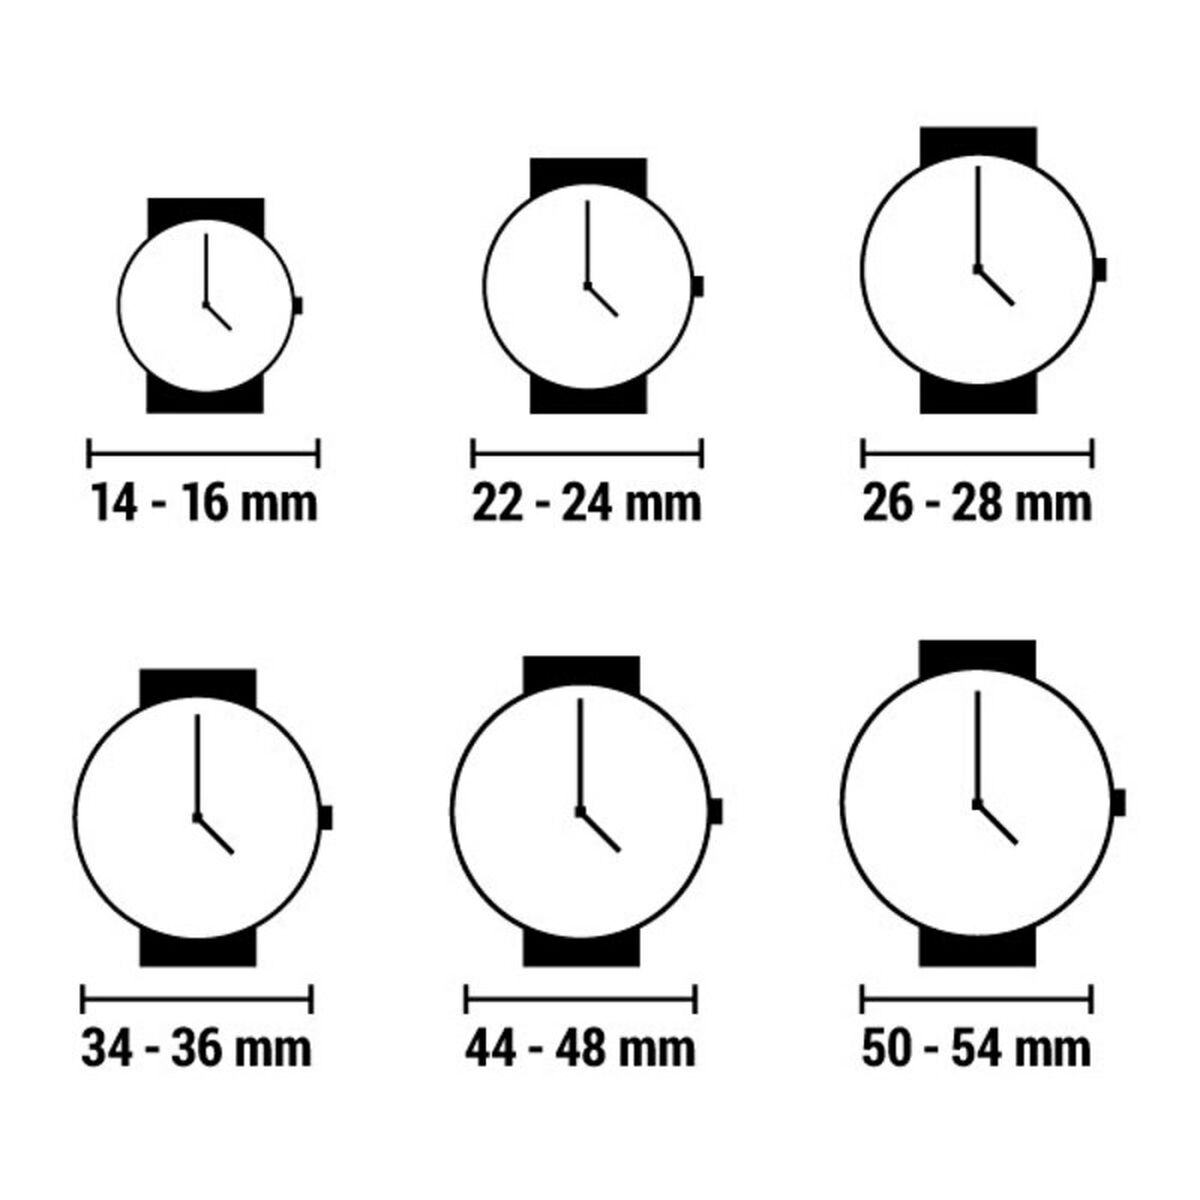 Damenuhr GC Watches Y05002M1 (Ø 36,5 mm) - AWK Flagship